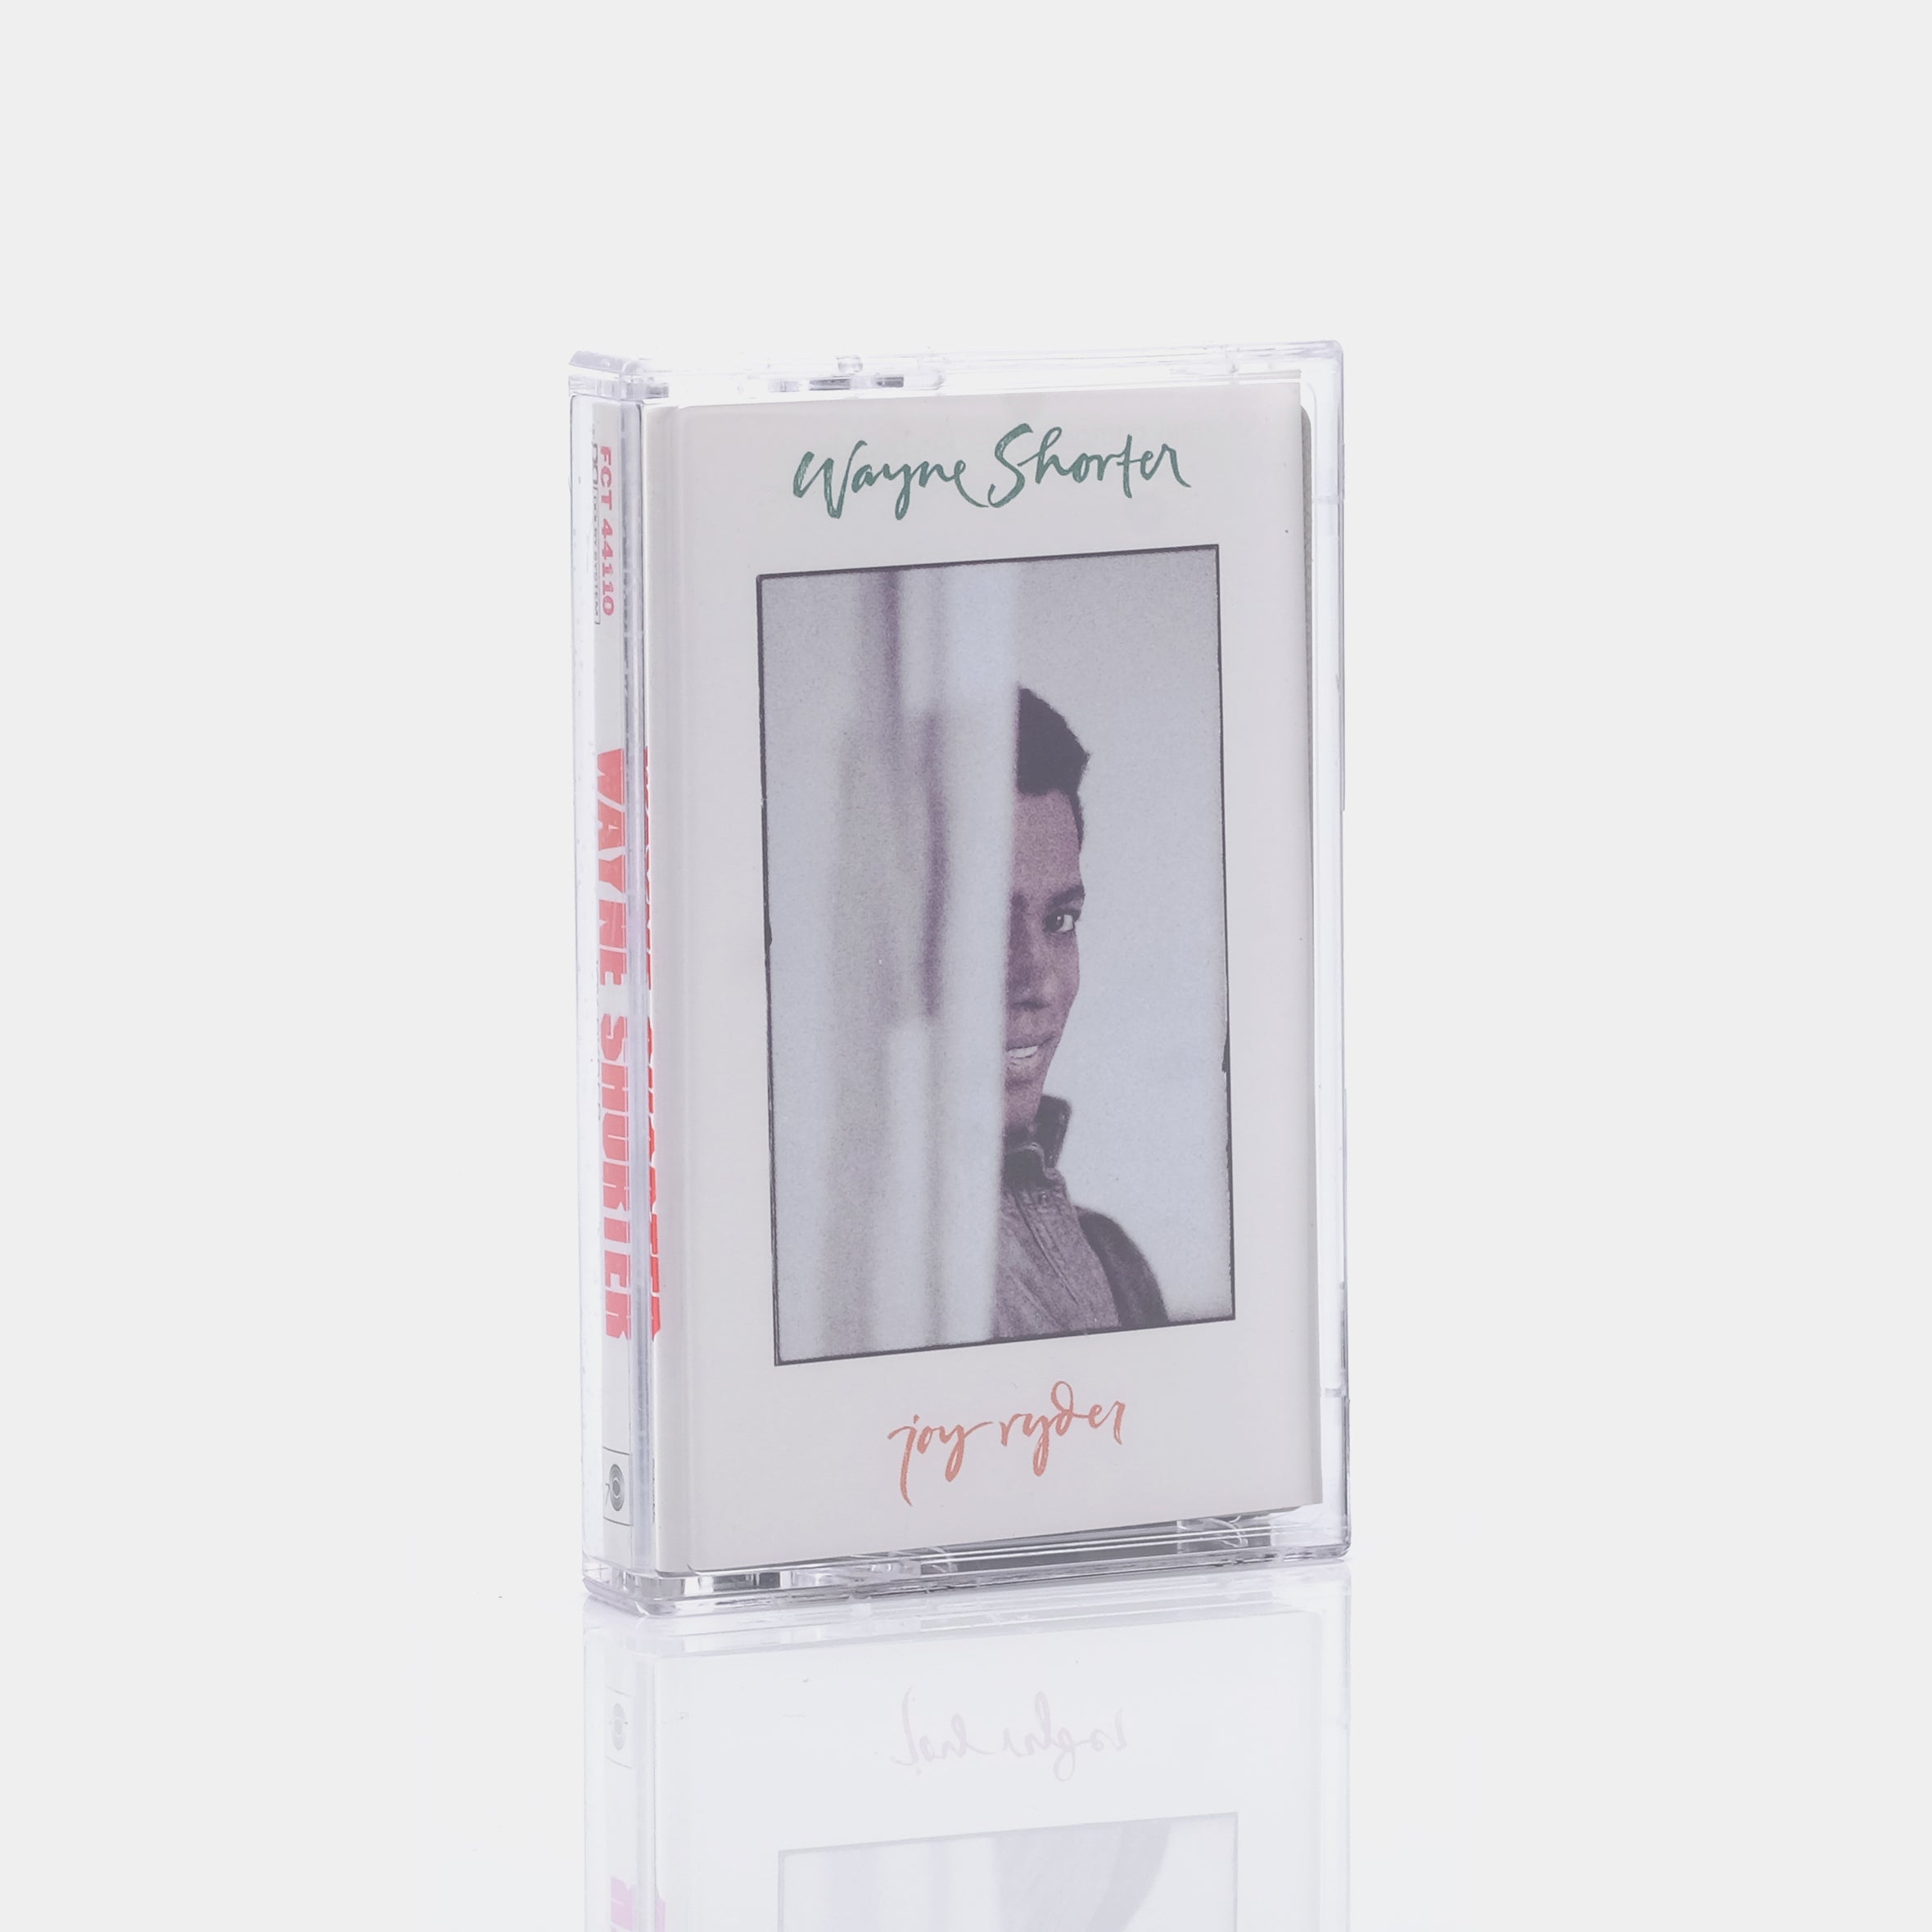 Wayne Shorter - Joy Ryder Cassette Tape